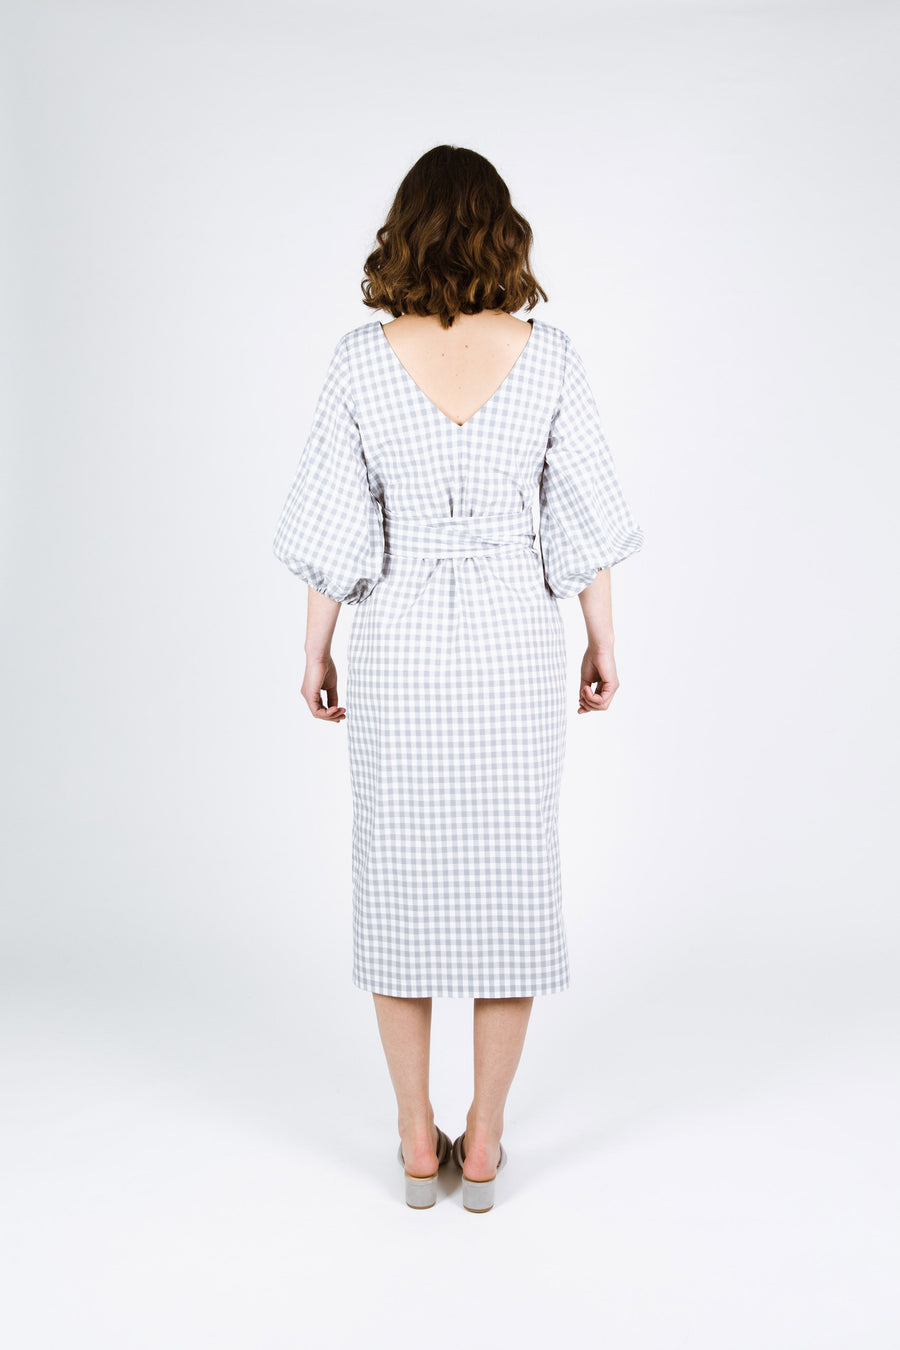 Aura Dress/Skirt pattern- Papercuts